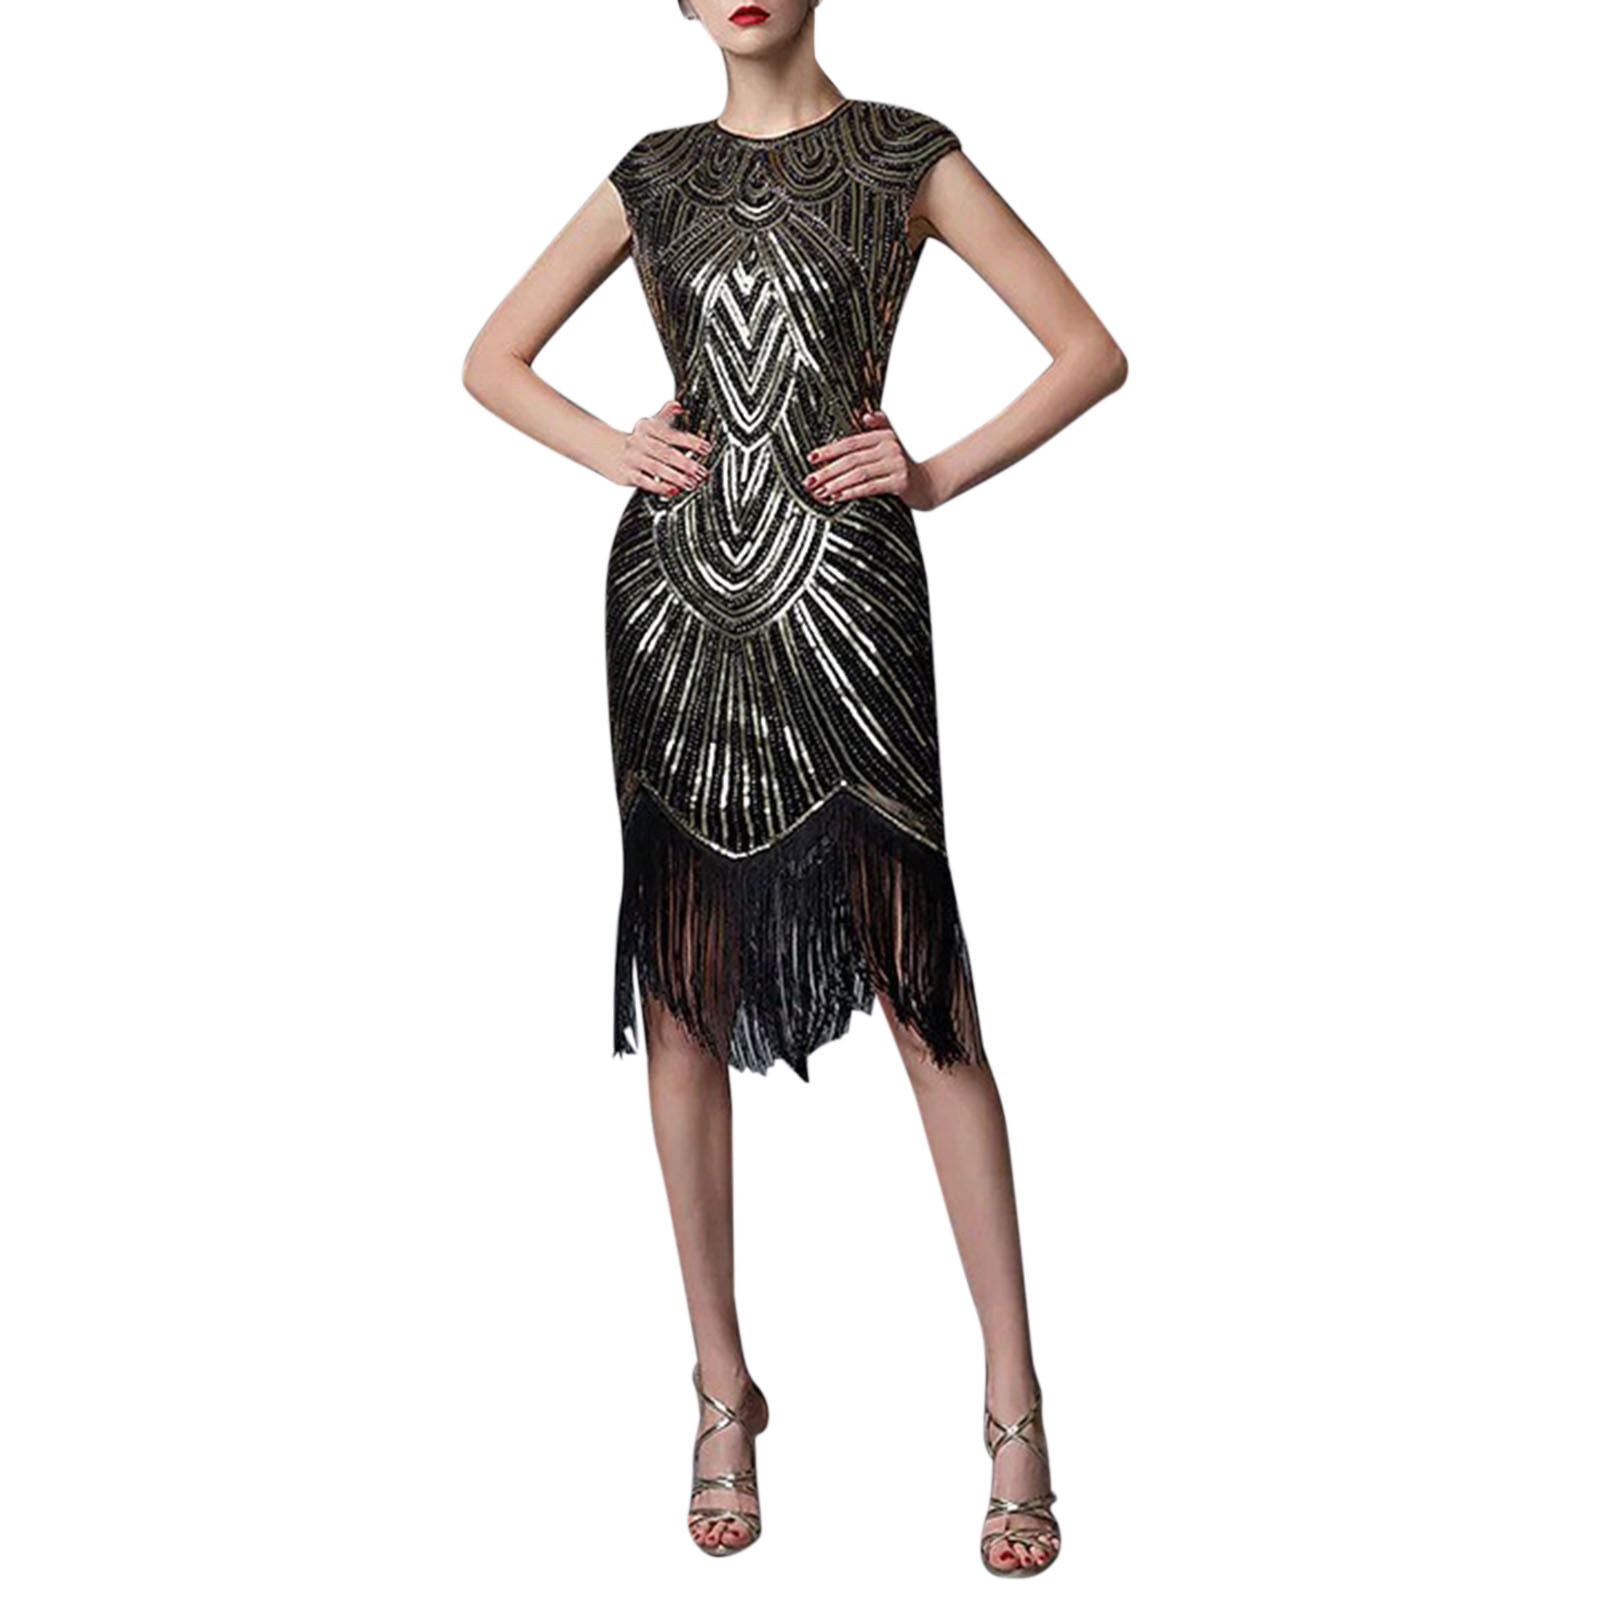 Fashion 1920s Vintage Casual Gothic Dress Plus Size Sequin Tassel 20s Girl Party Dress - Walmart.com